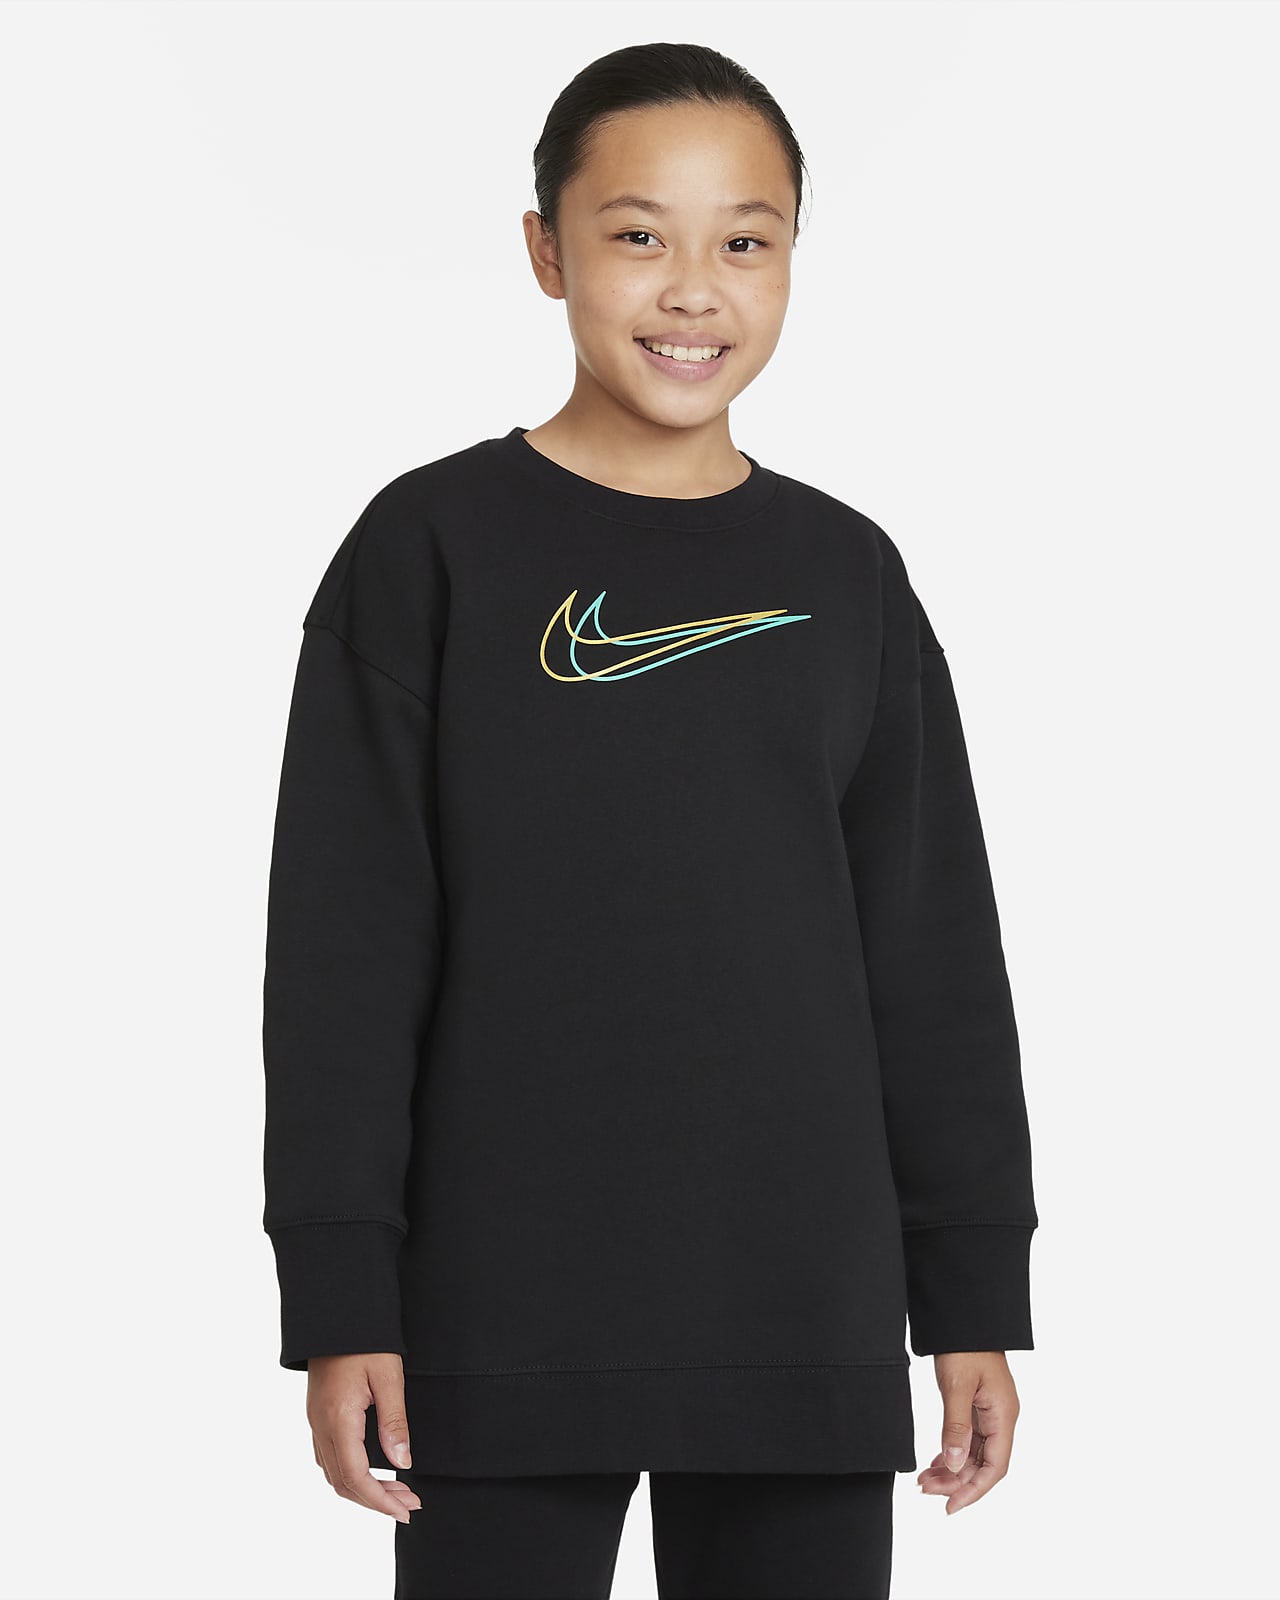 Sweatshirt Nike Sportswear Júnior (Rapariga)